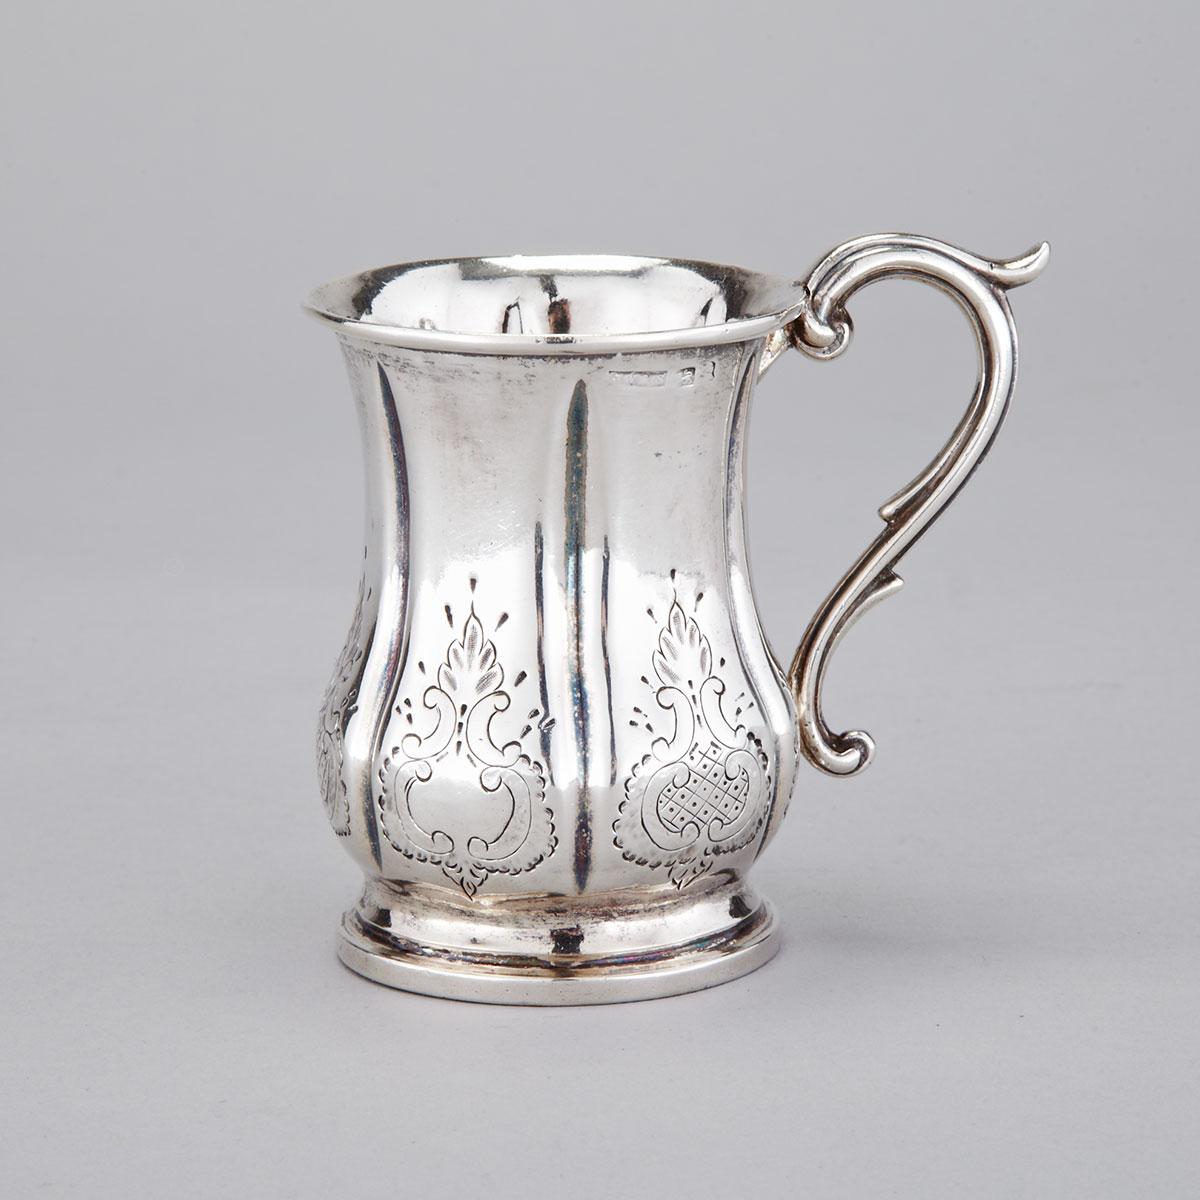 Canadian Silver Small Mug, John Wood & Son, Montreal, Que., c.1844-70